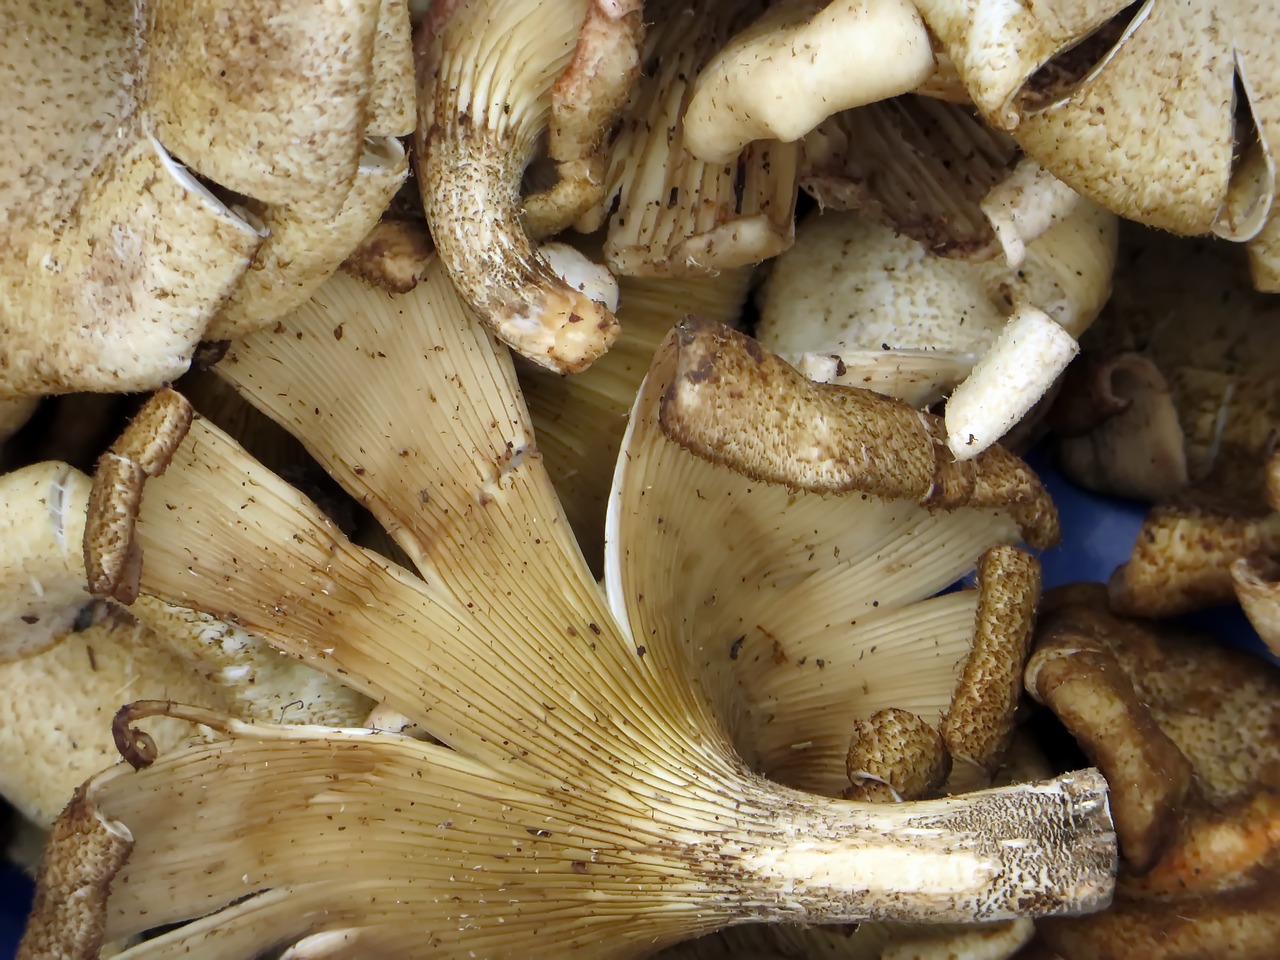 laos market mushrooms free photo